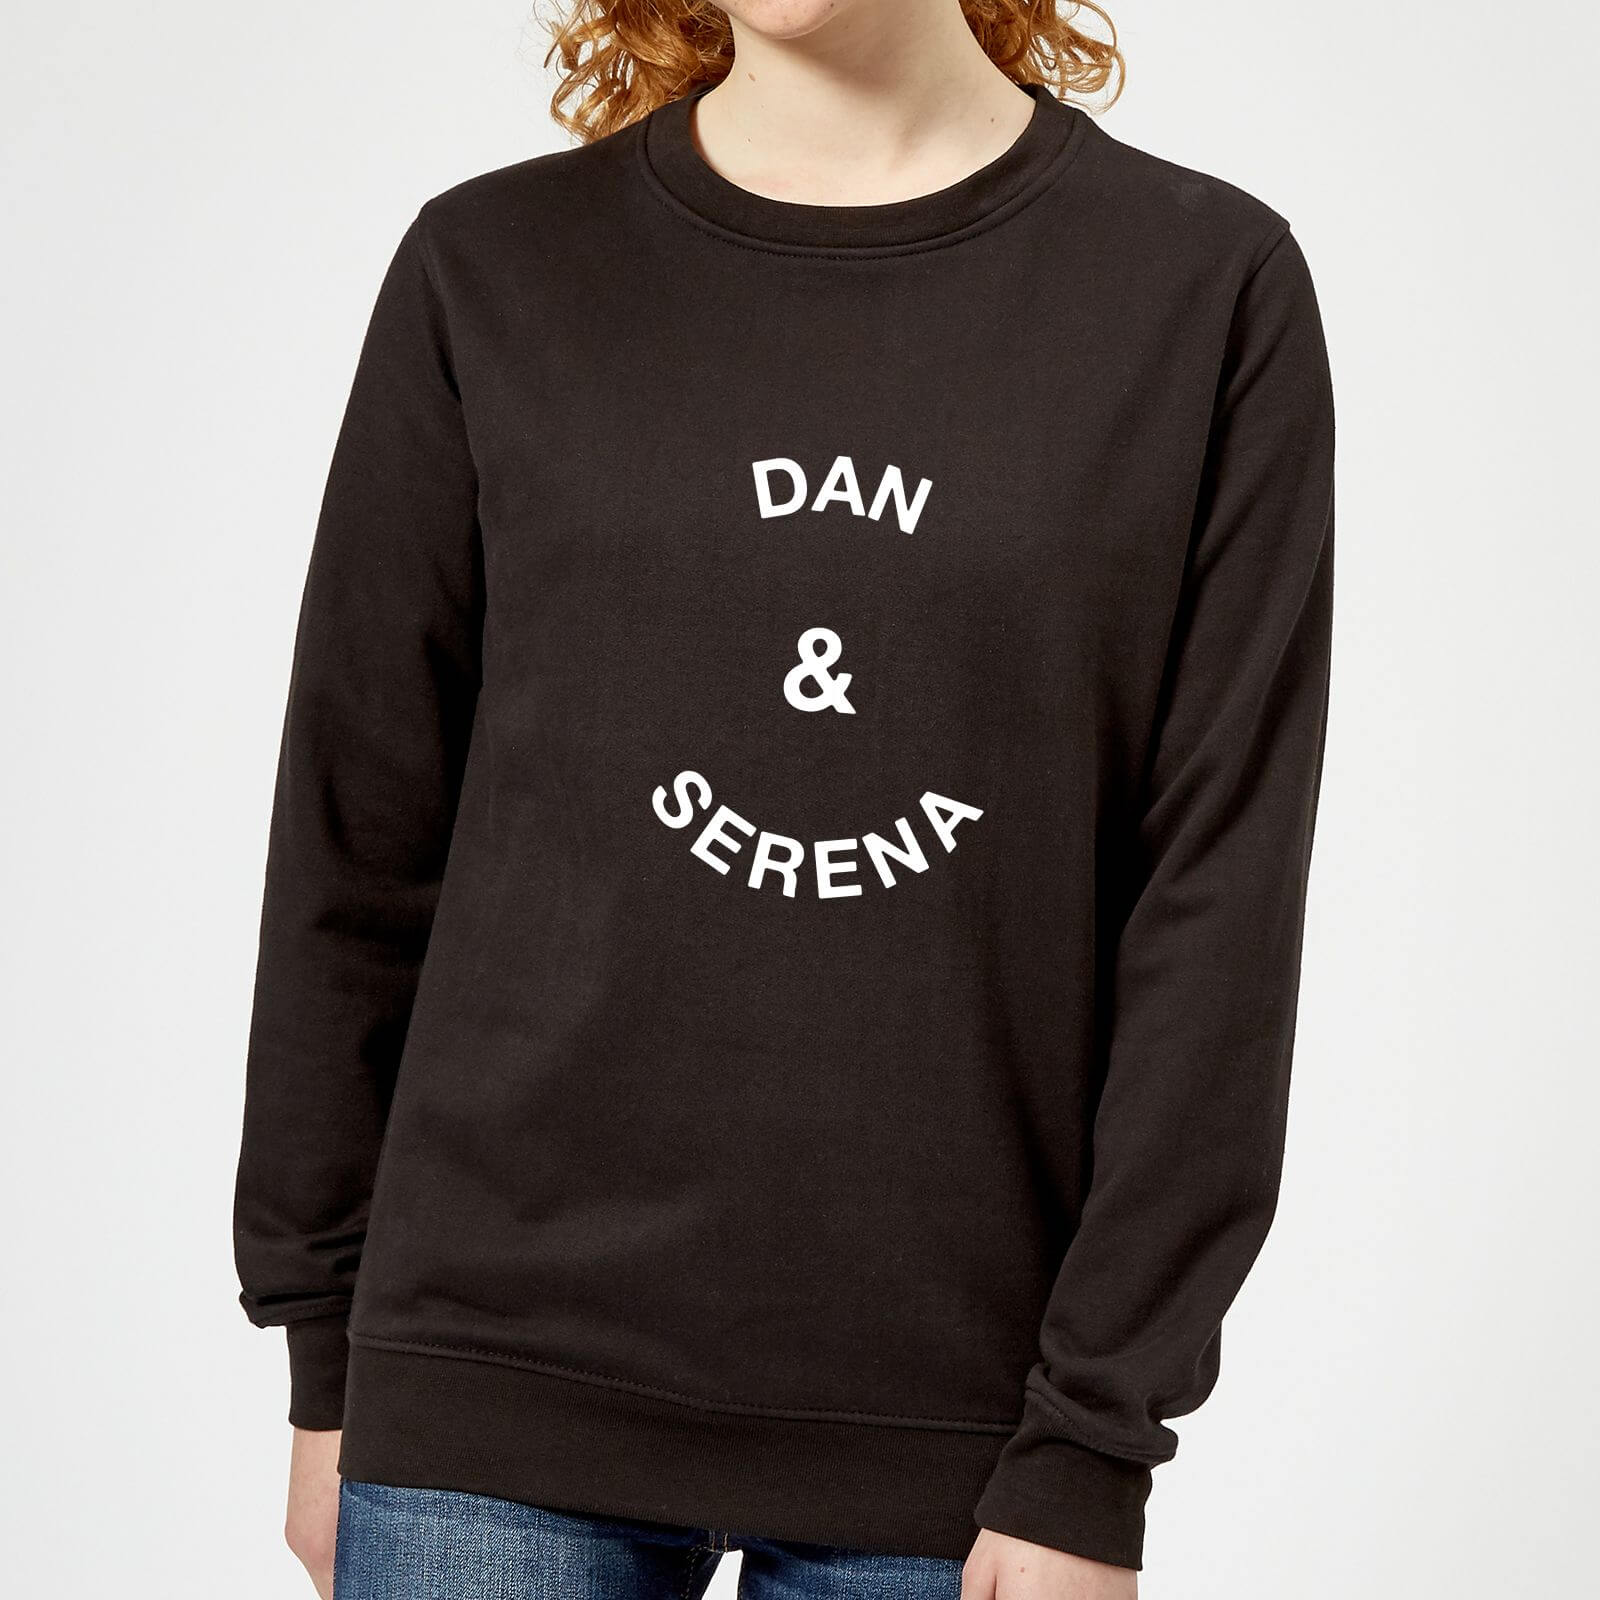 Dan & Serena Women's Sweatshirt - Black - M - Black